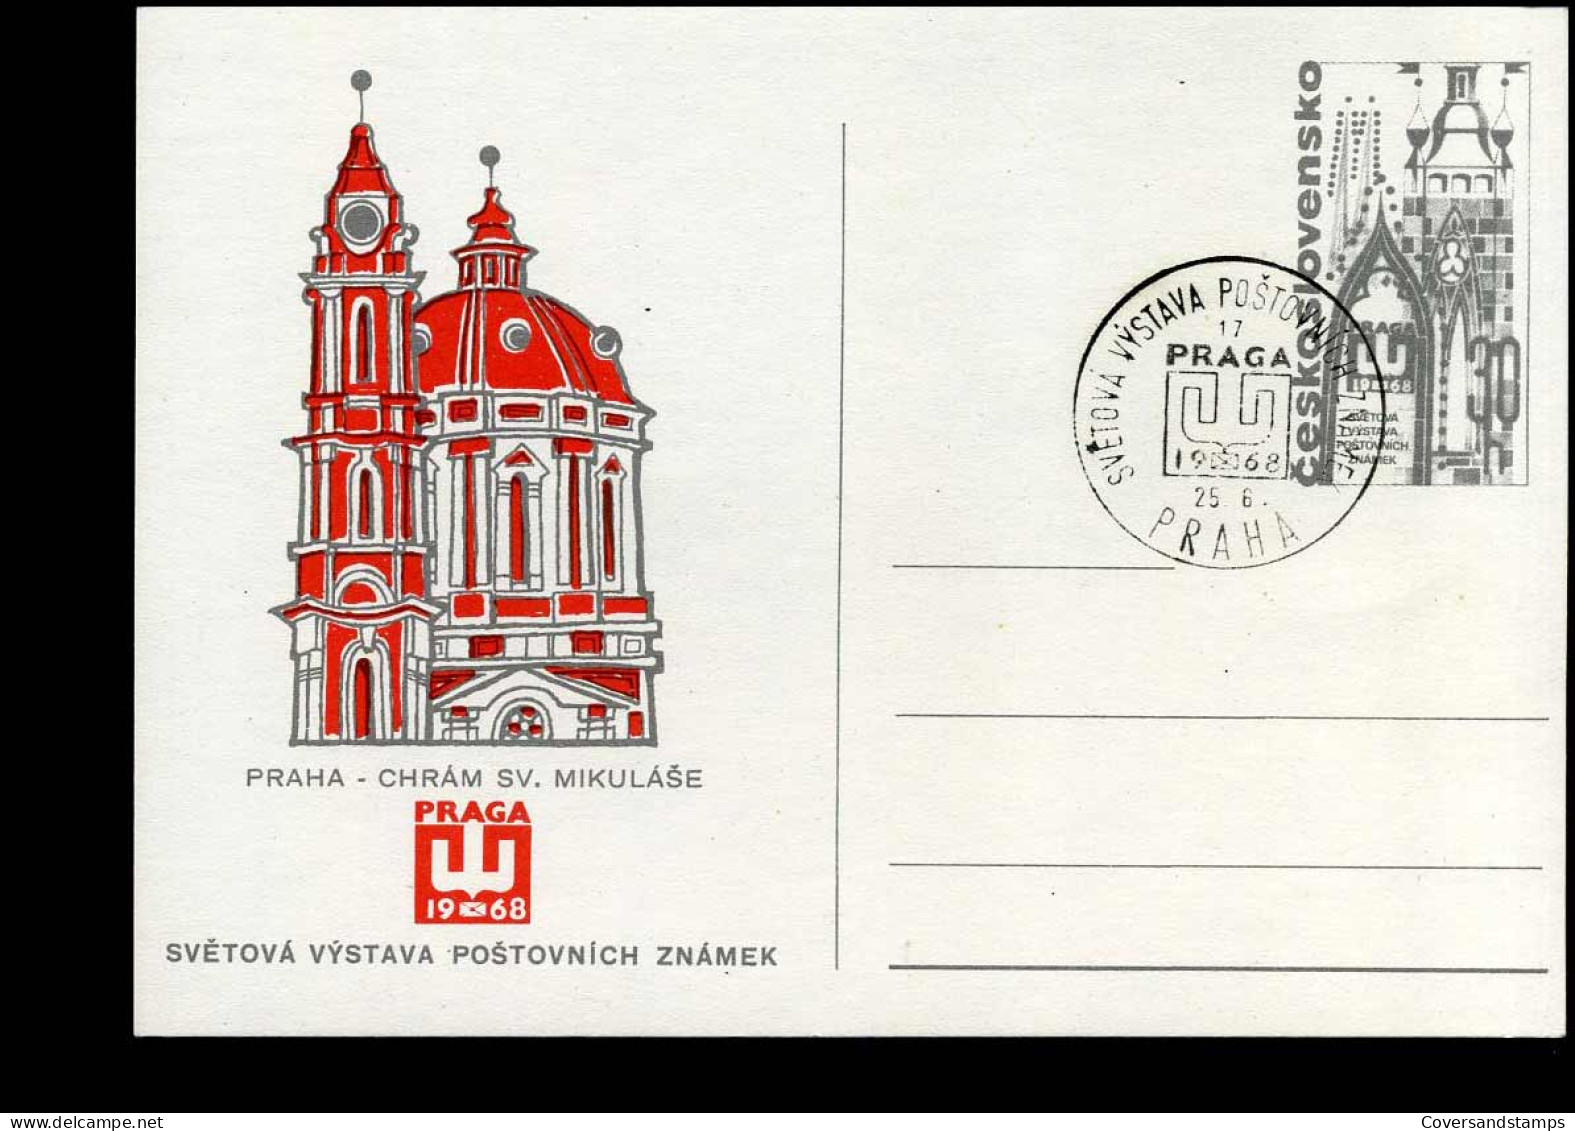 Post Card - World Philatelic Exhibition PRAGA  '68 - Chram SV. Mikulase - Postcards